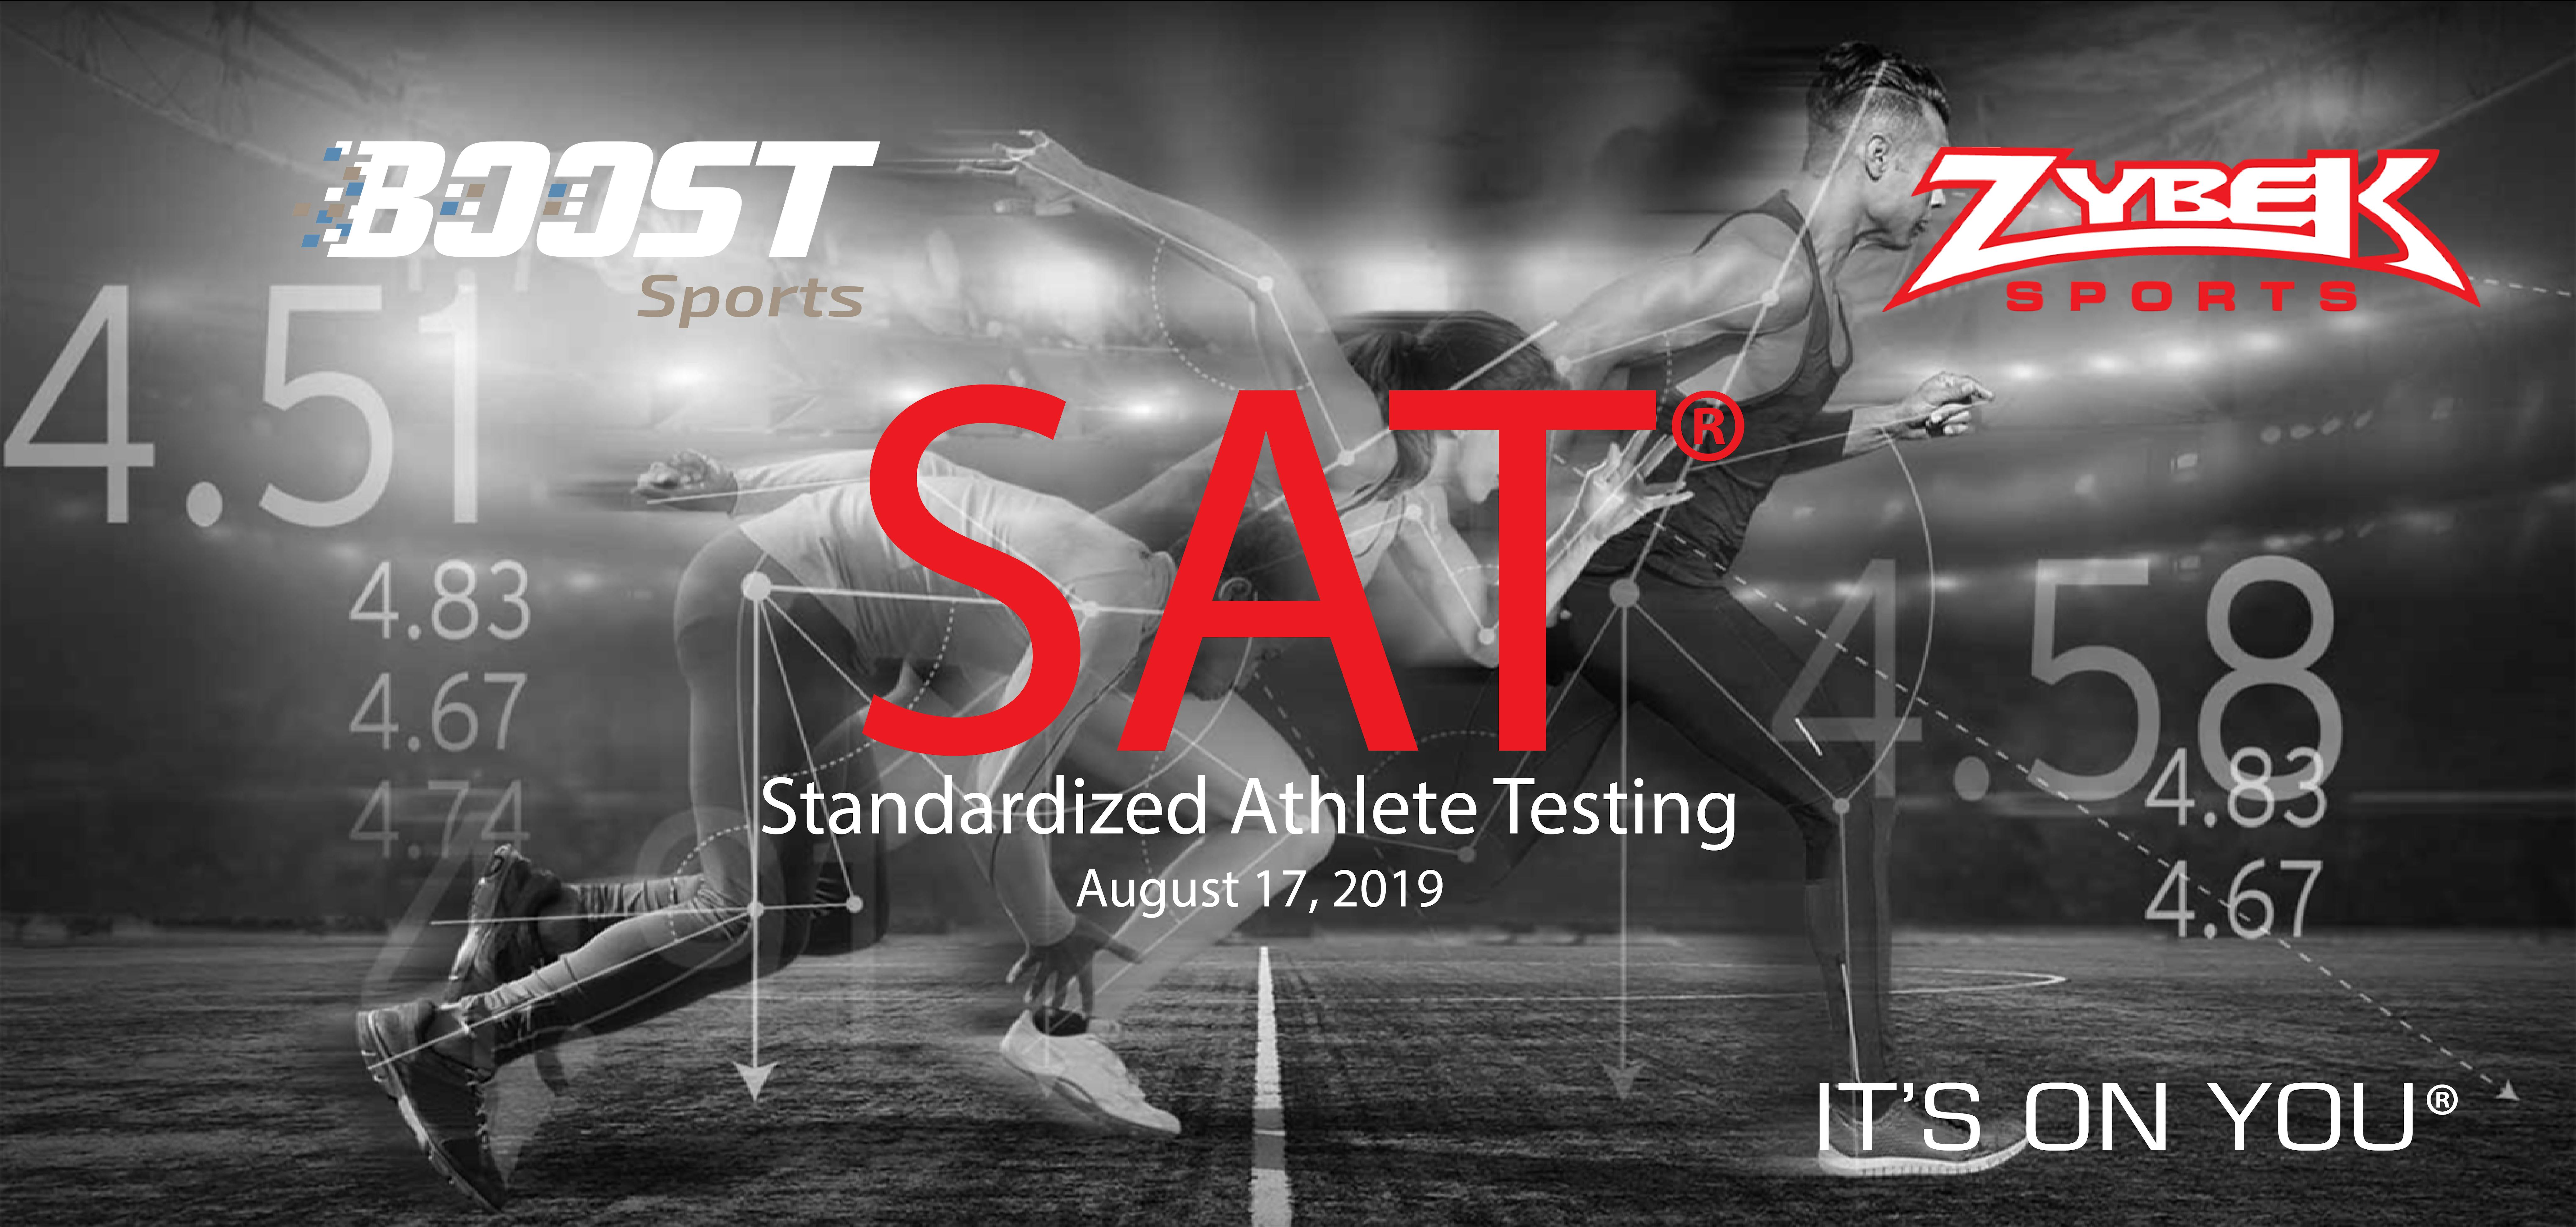 Standardized Athlete Testing